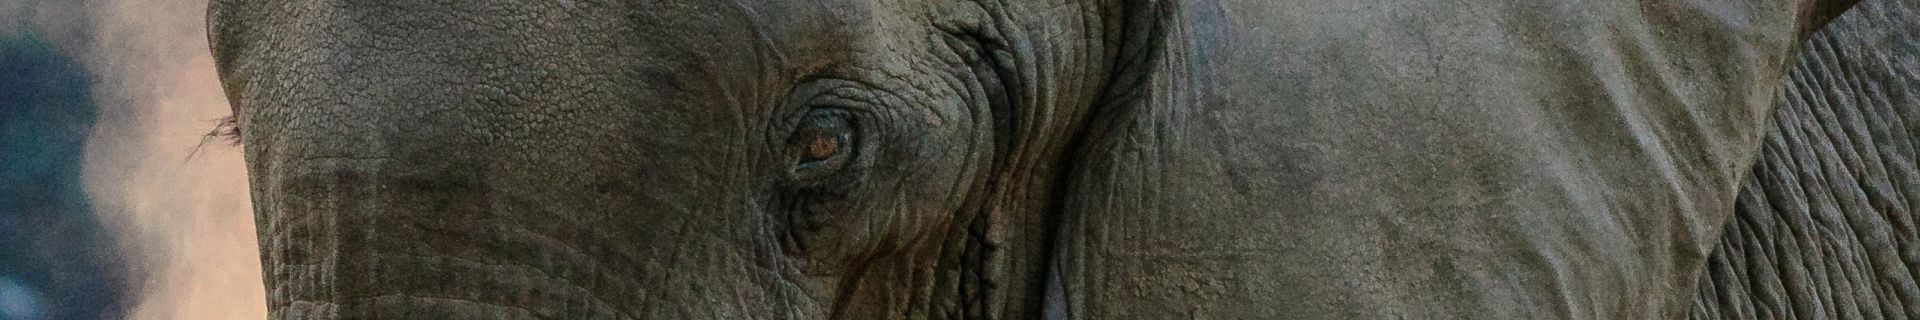 Elephant Close Up Tanzania